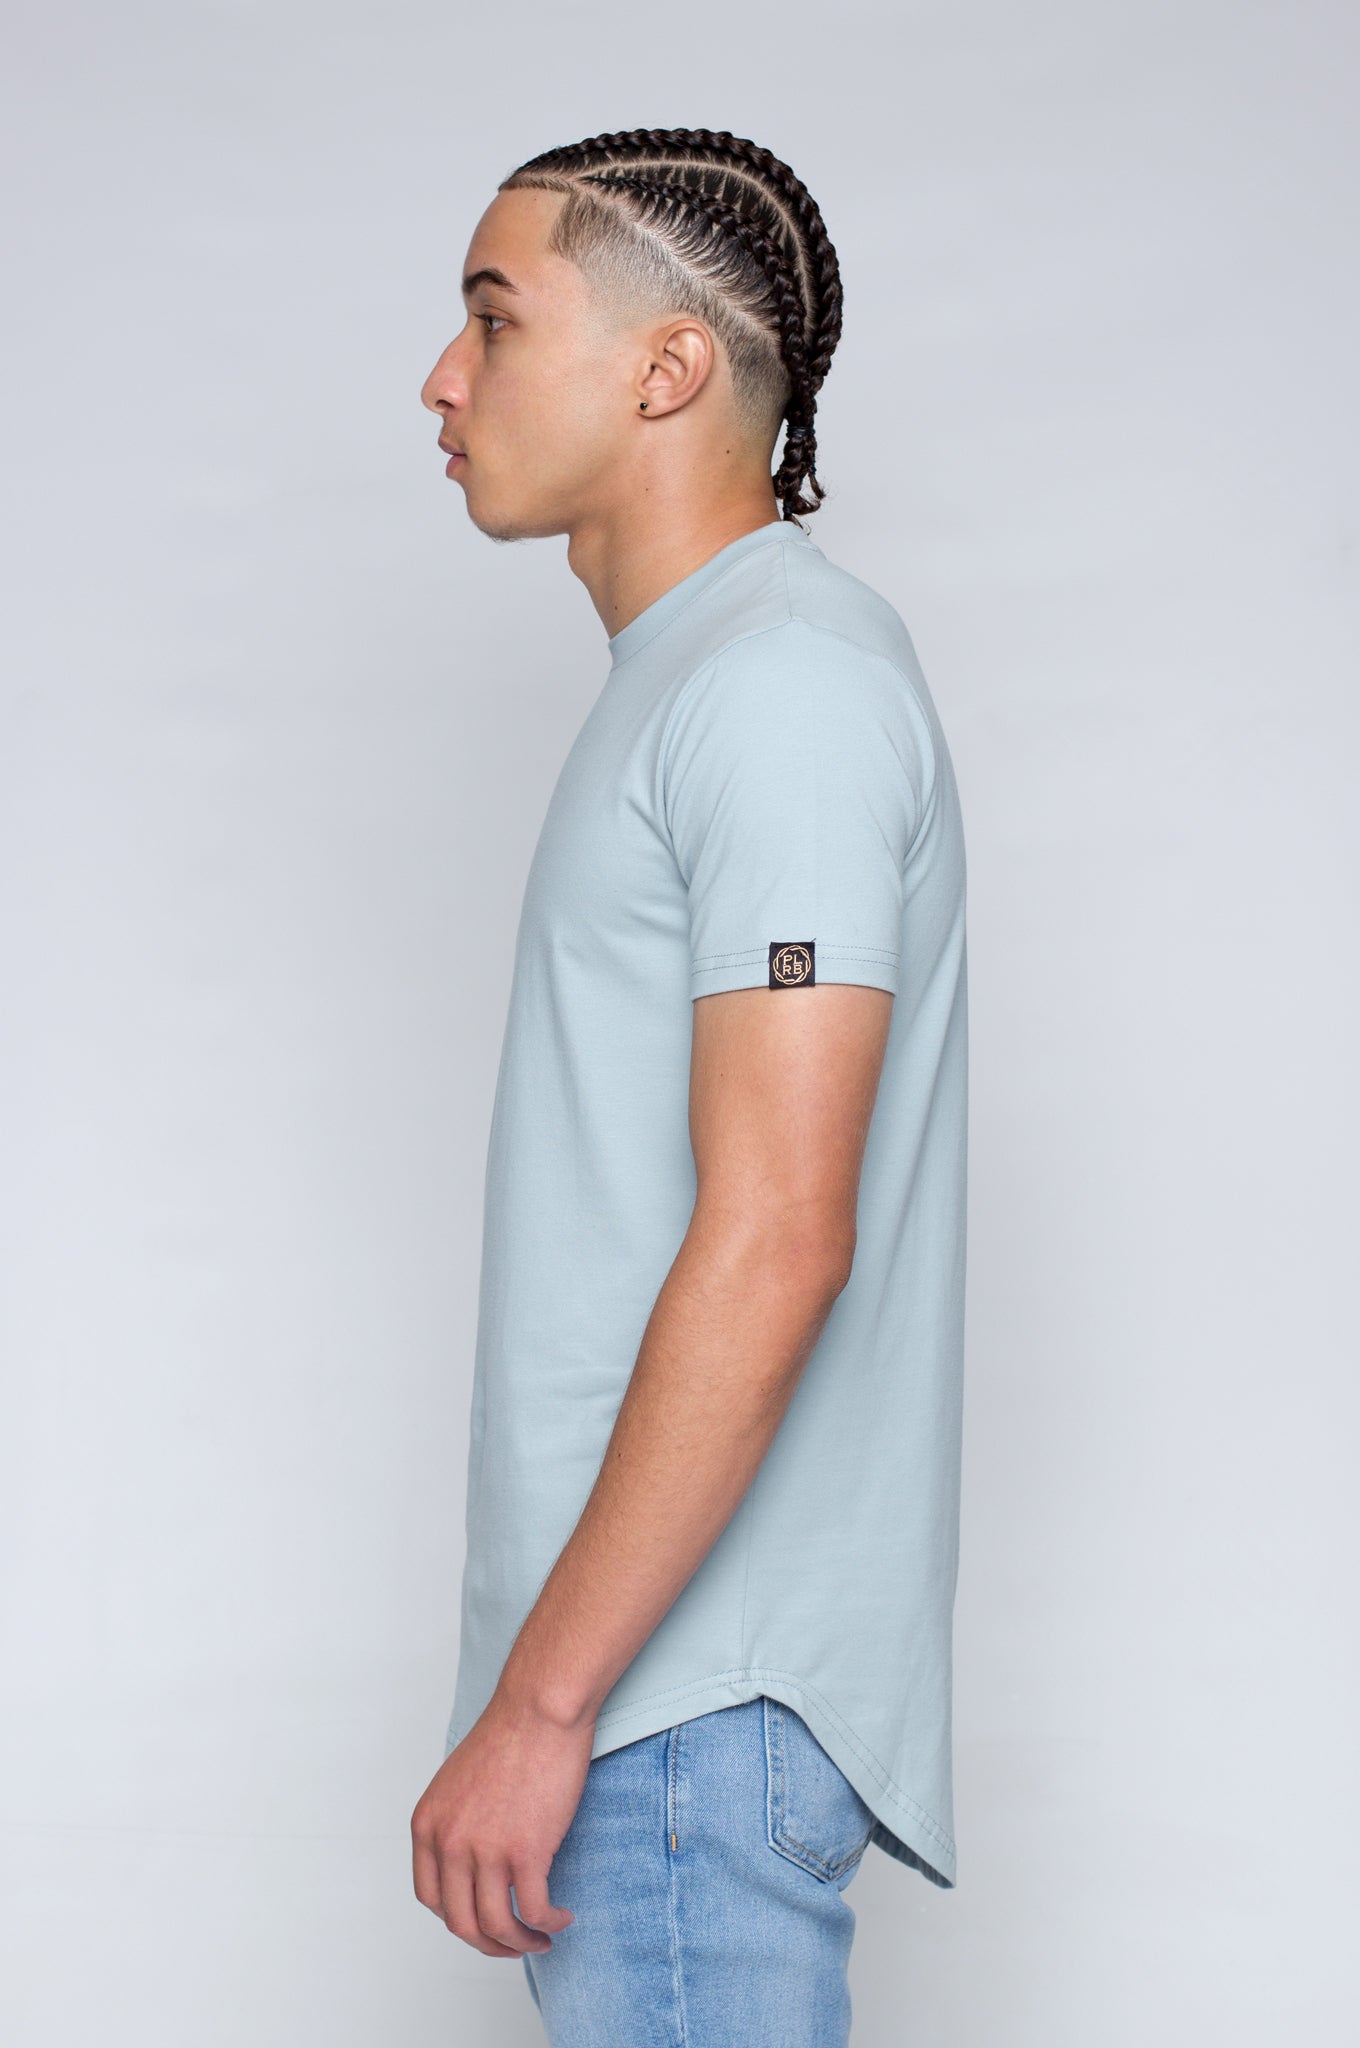 Scallop-Cut T-Shirt in Steel Blue | Poor Little Rich Boy Clothing